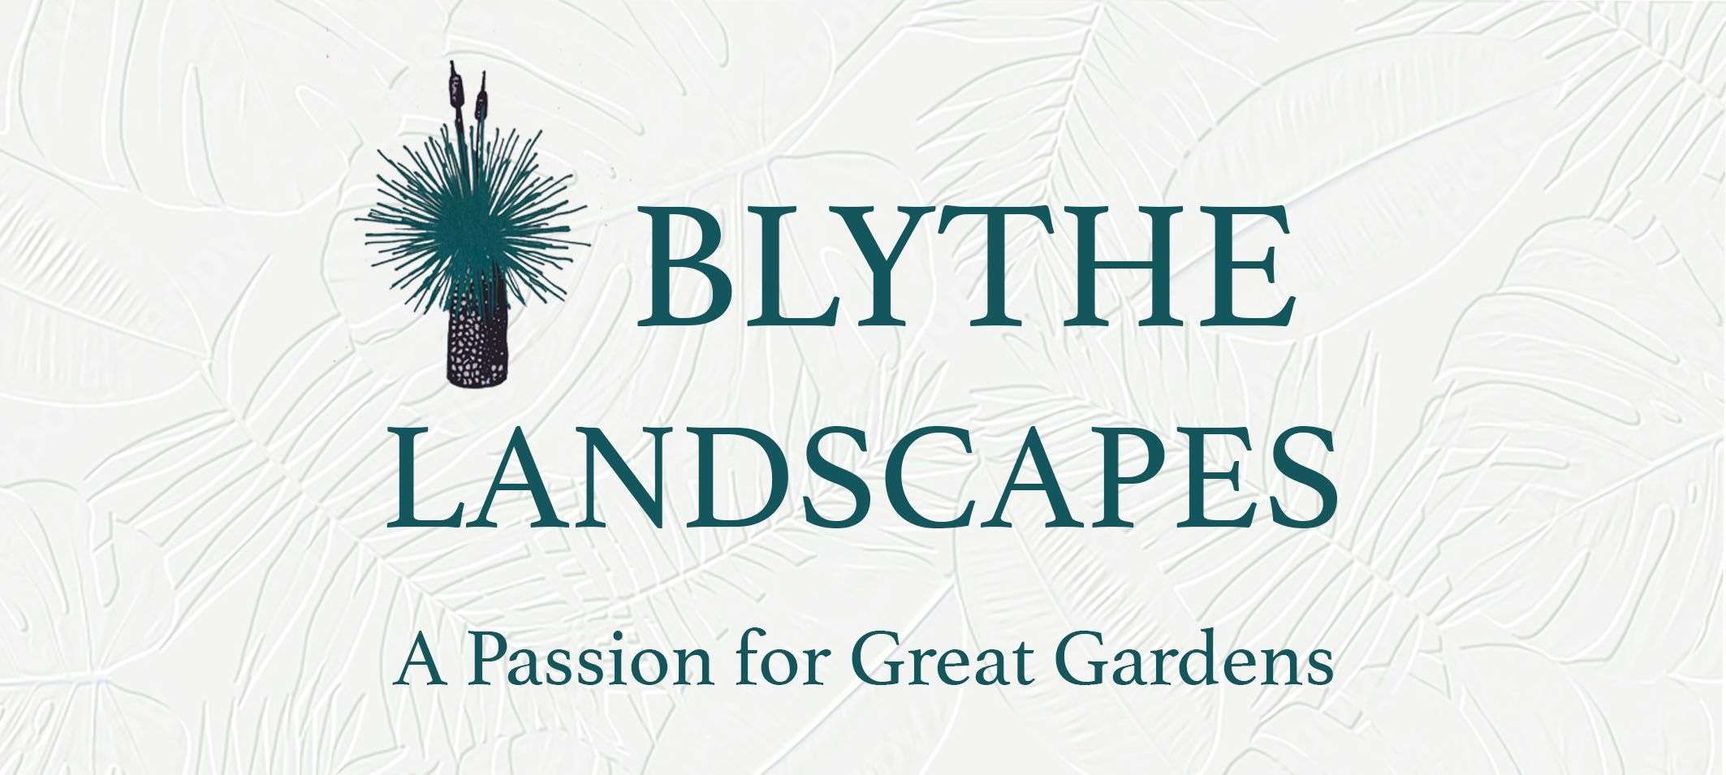 Blythe Landscapes gallery image 6